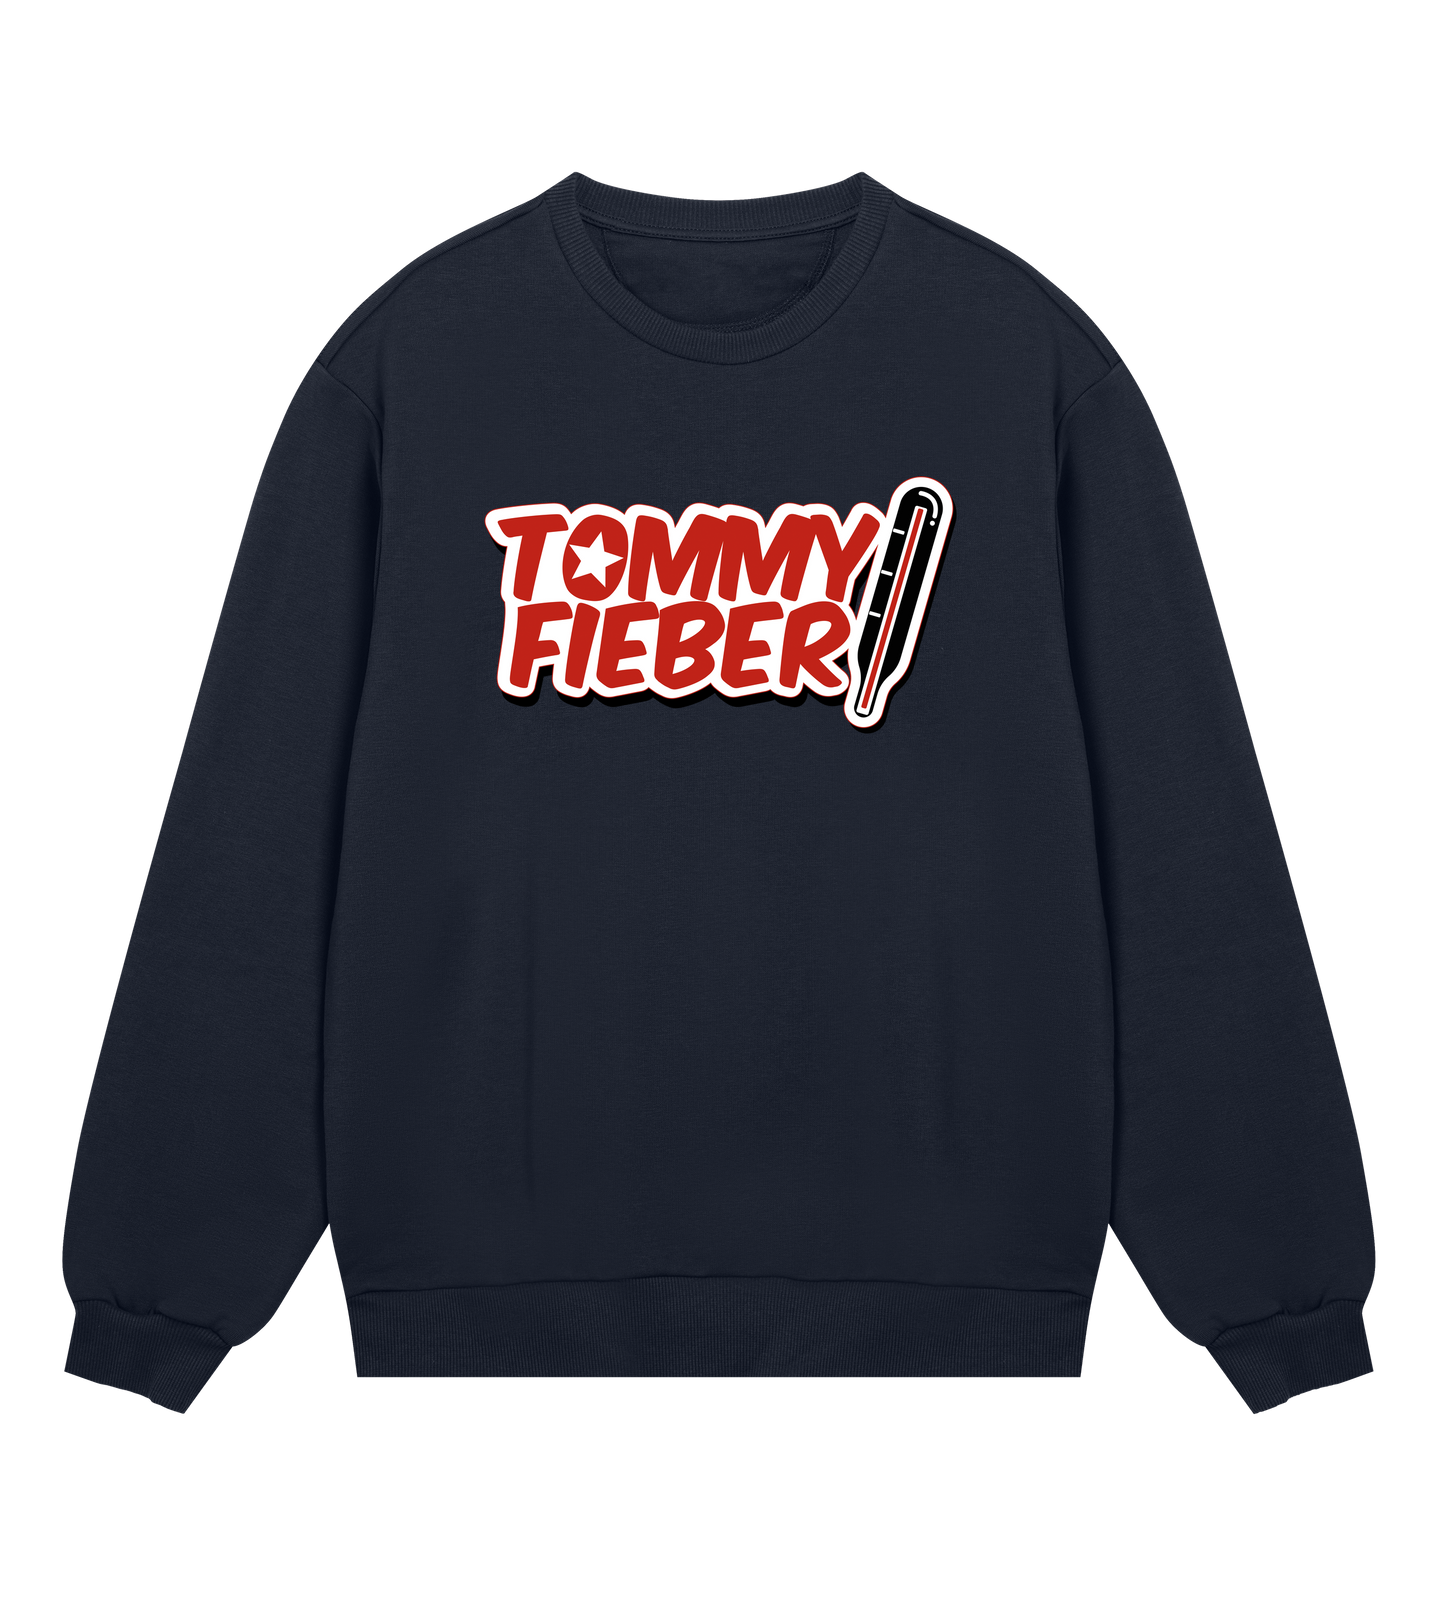 Tommy Fieber - Mens Regular Sweatshirt